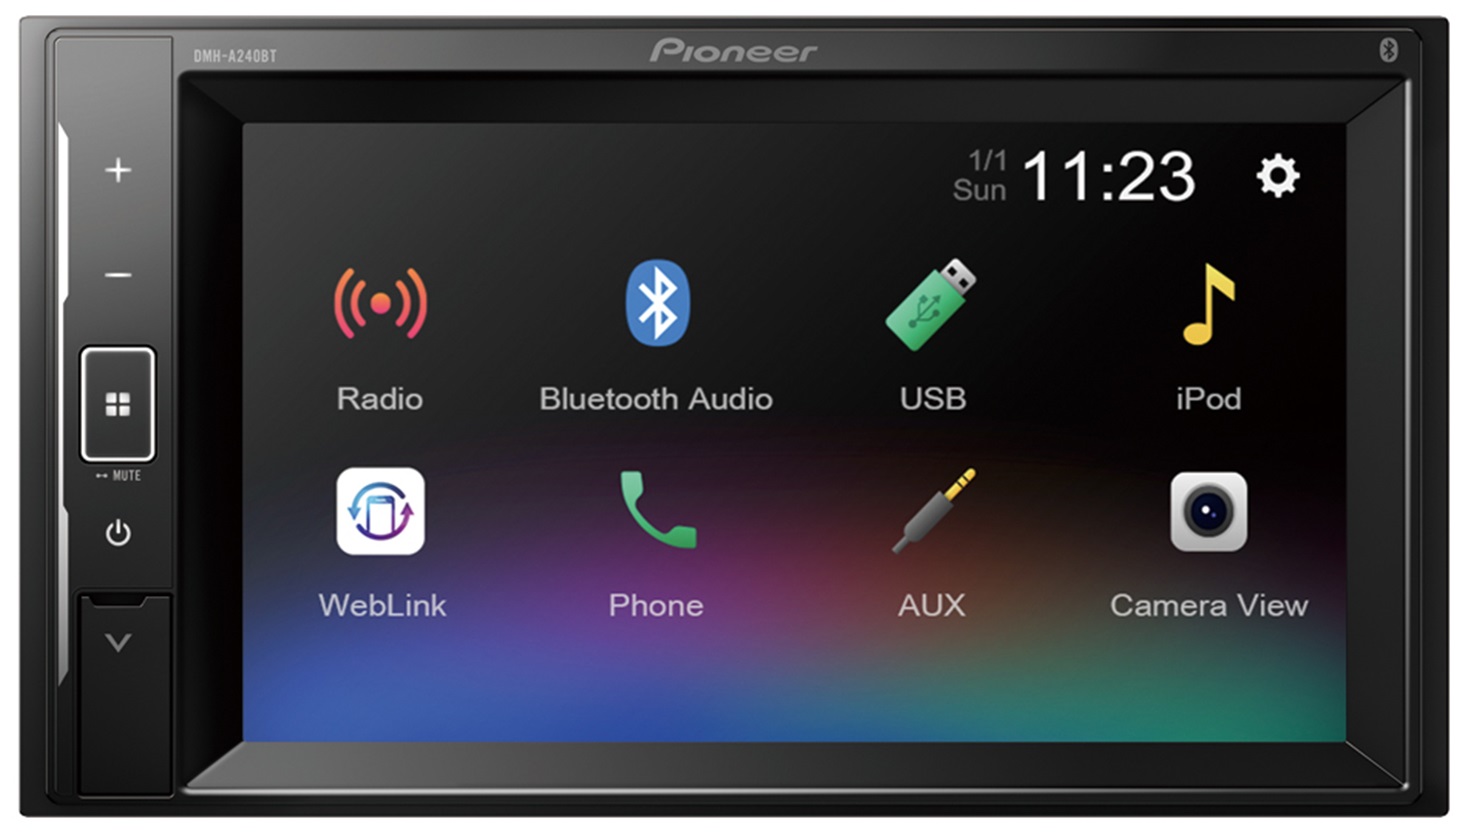 Billede af Pioneer DMH-A240BT Multimedie Bilradio m. Bluetooth